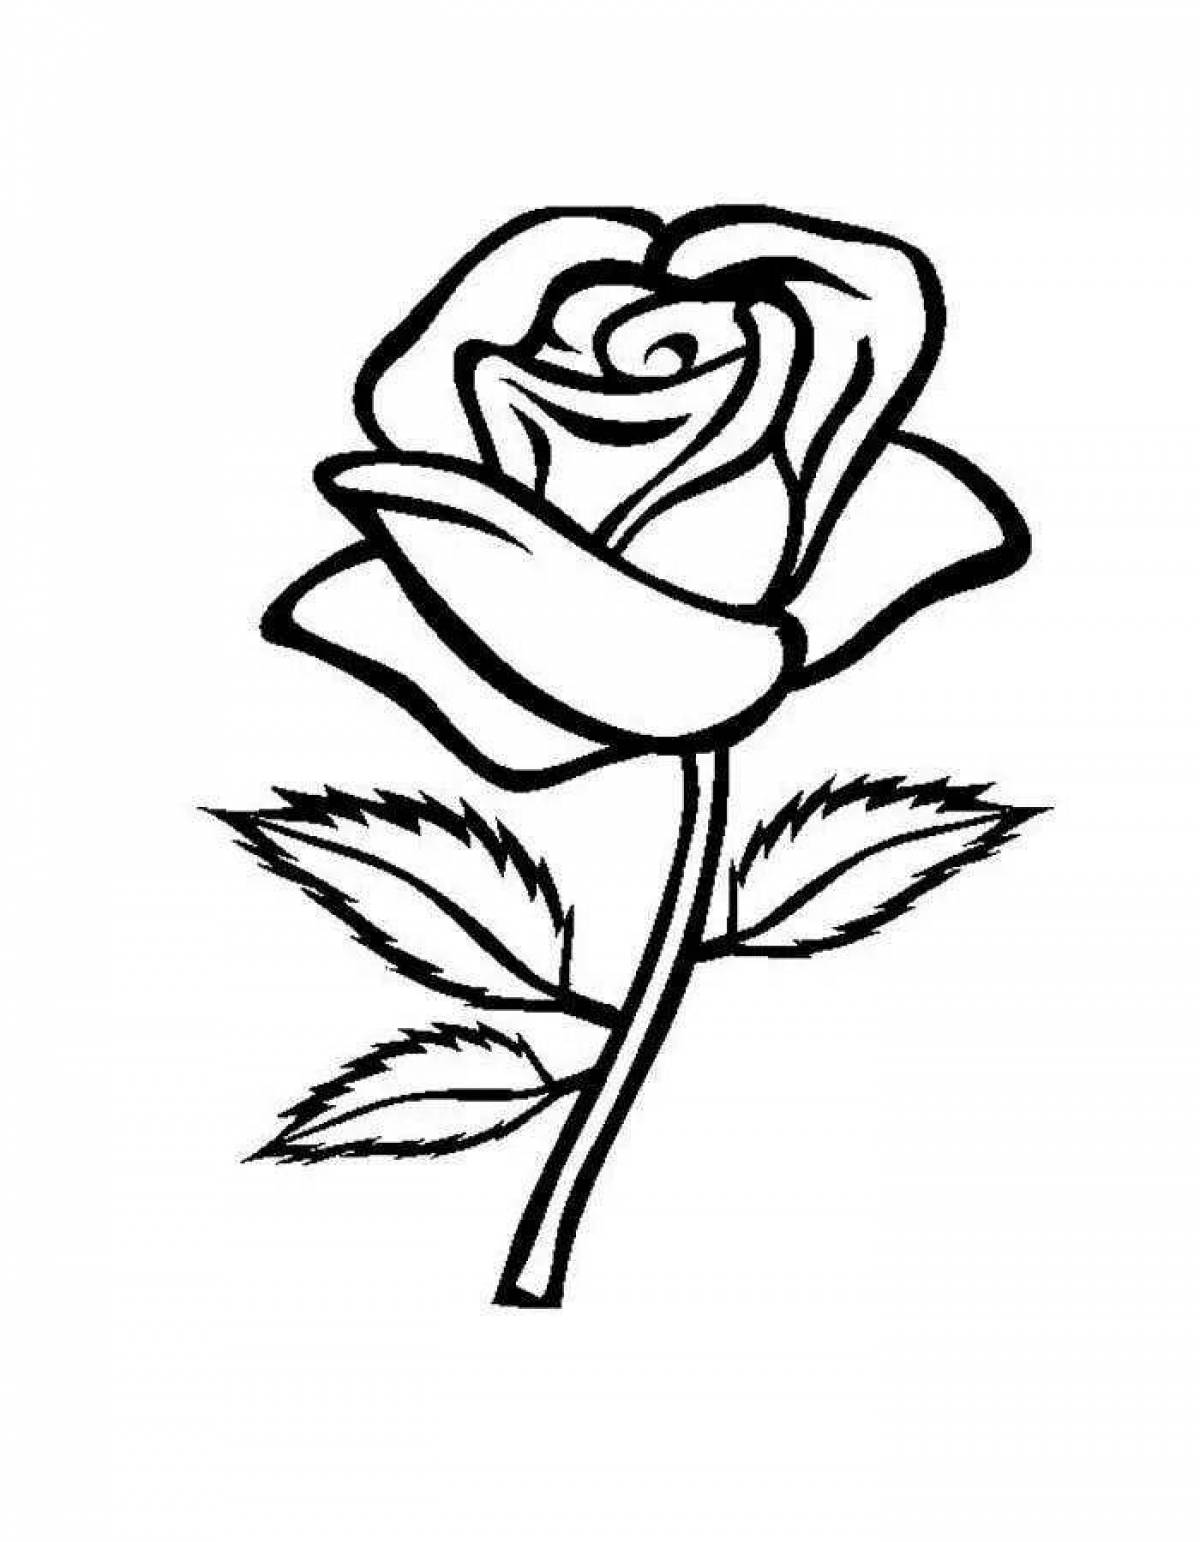 Flowering rose coloring page